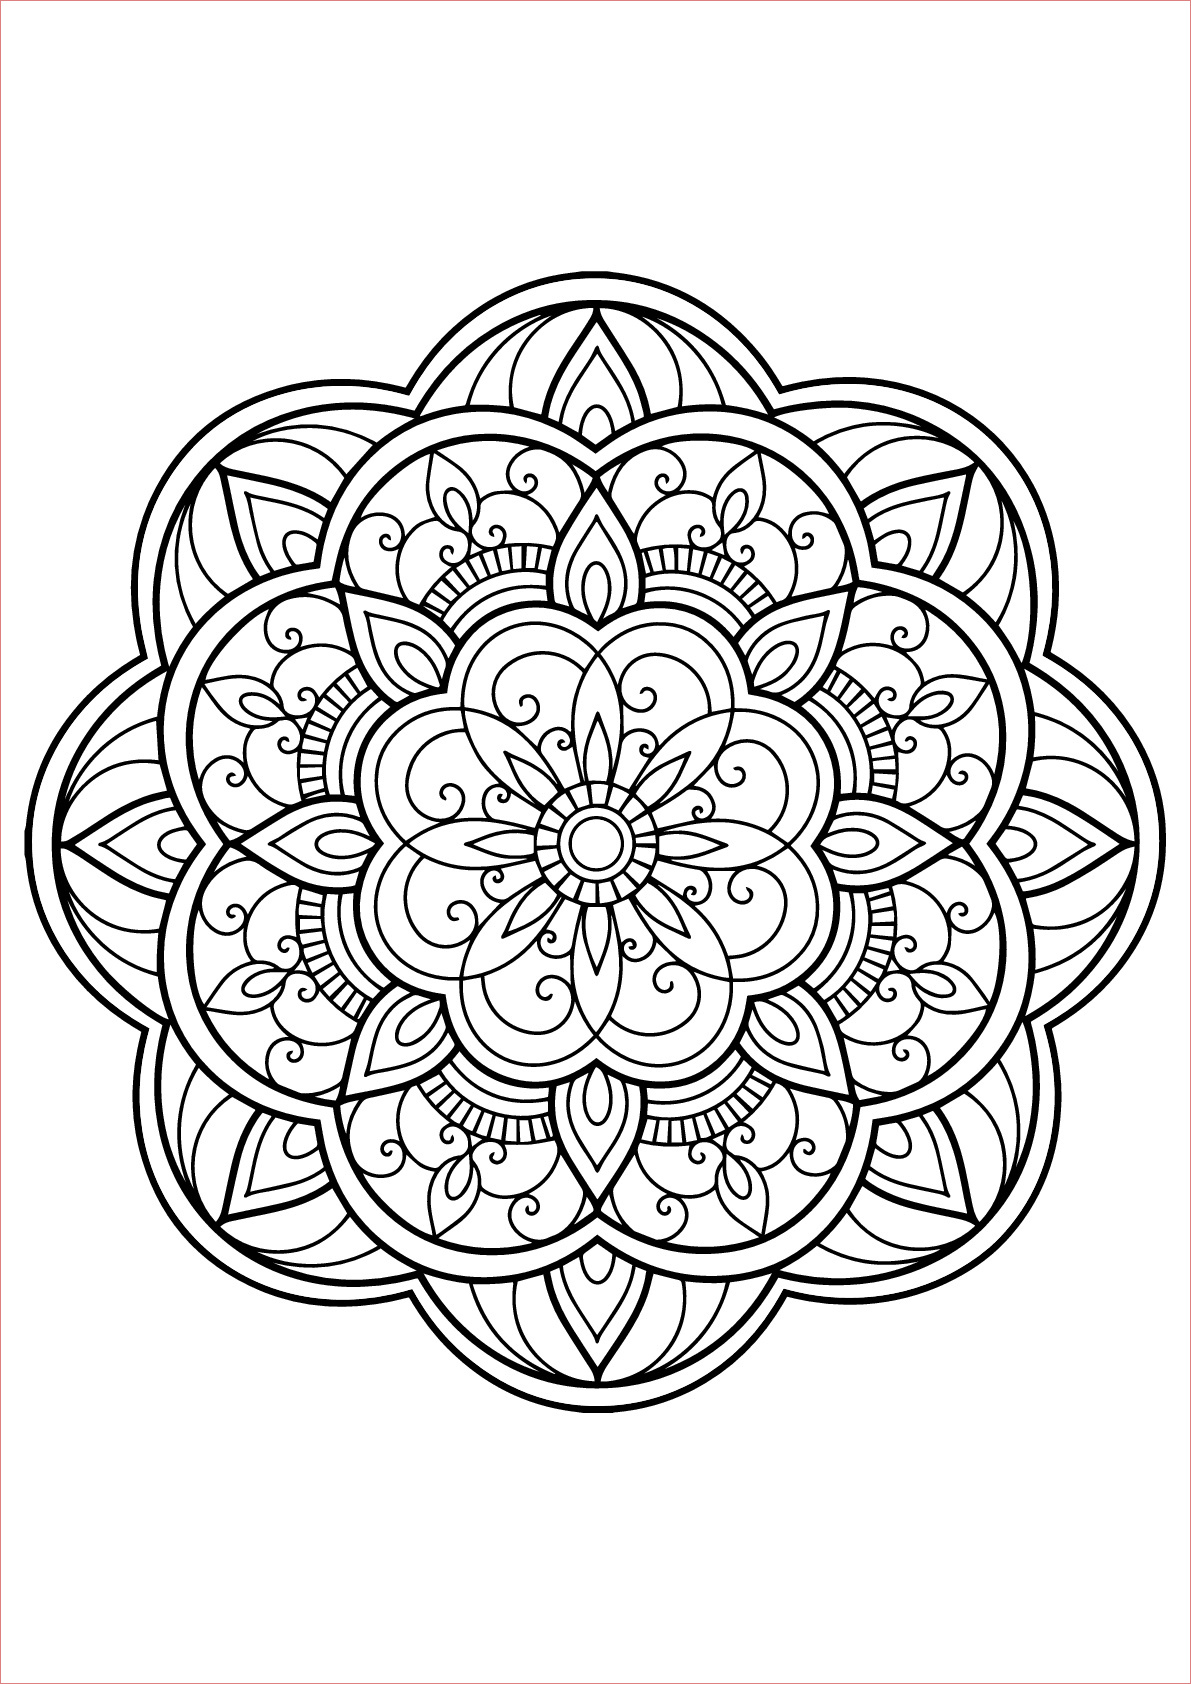 image=mandalas mandala from free coloring book for adults 14 1